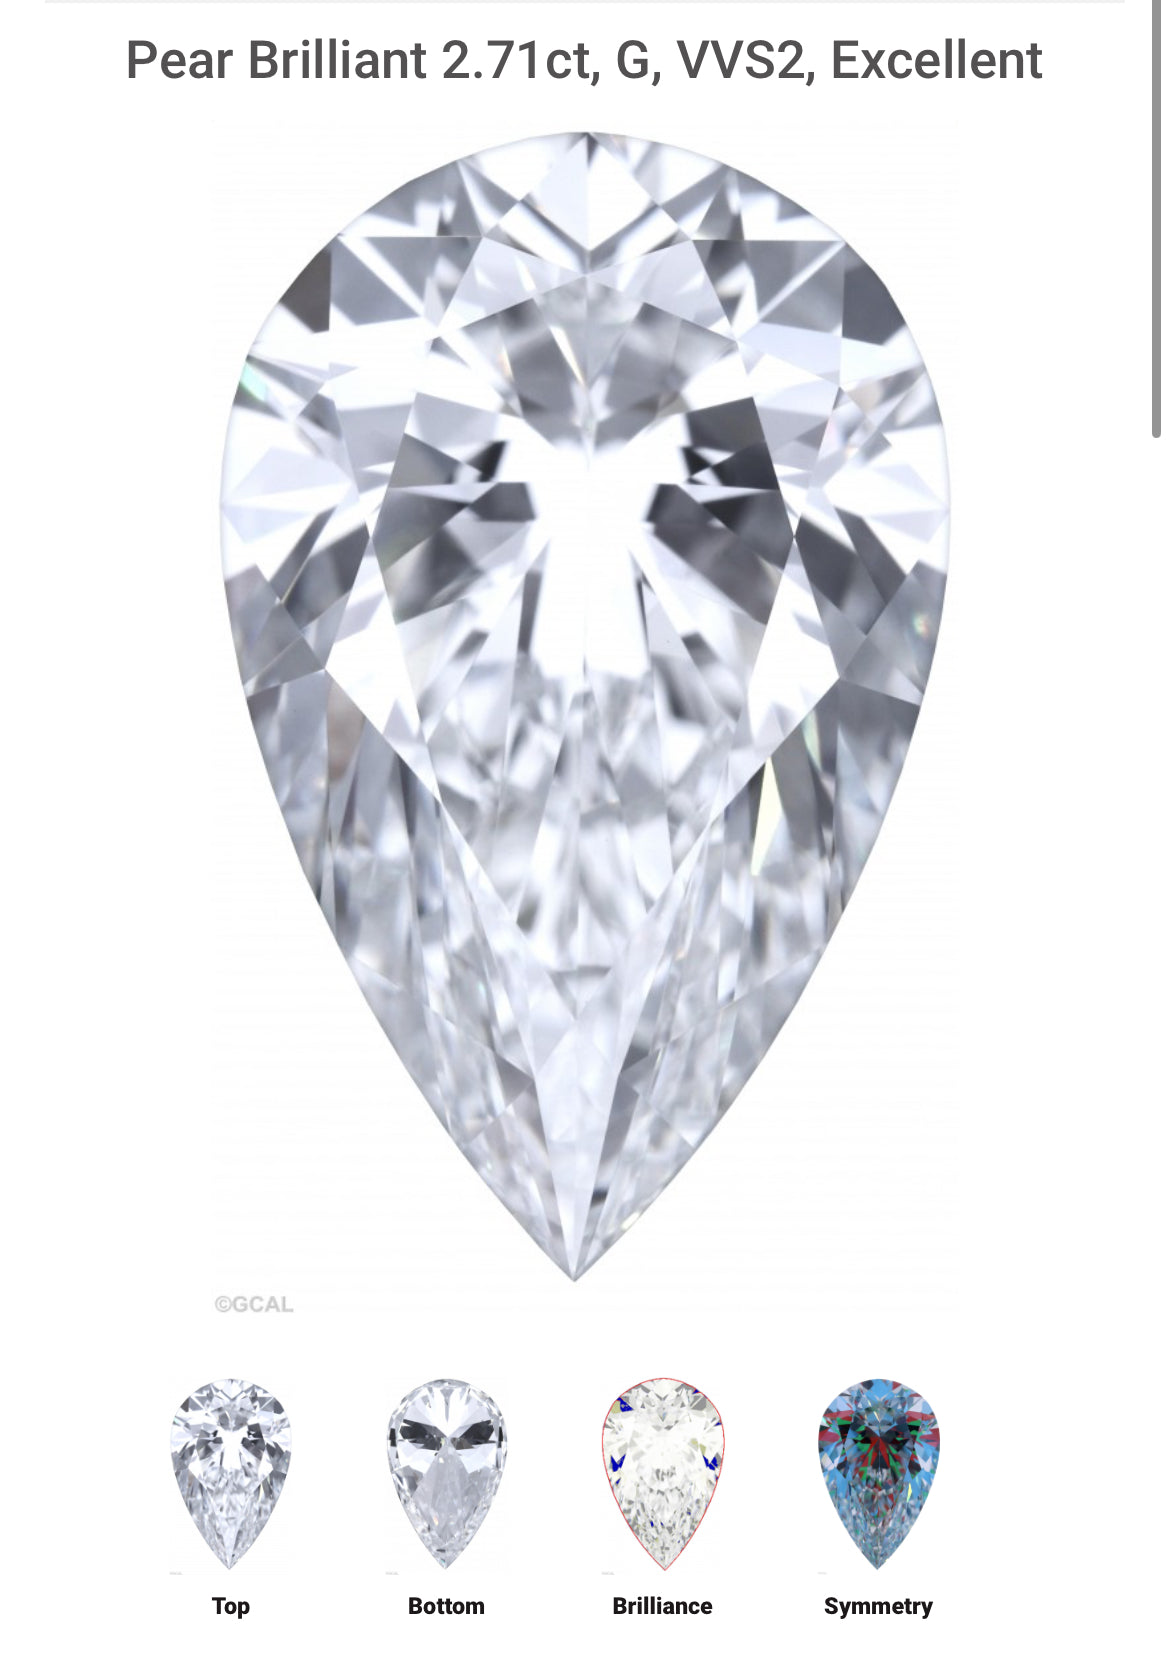 PEAR 2.70 Lab Grown Diamond , Color G , Clarity VVS2, IGI Certificate LG330041526